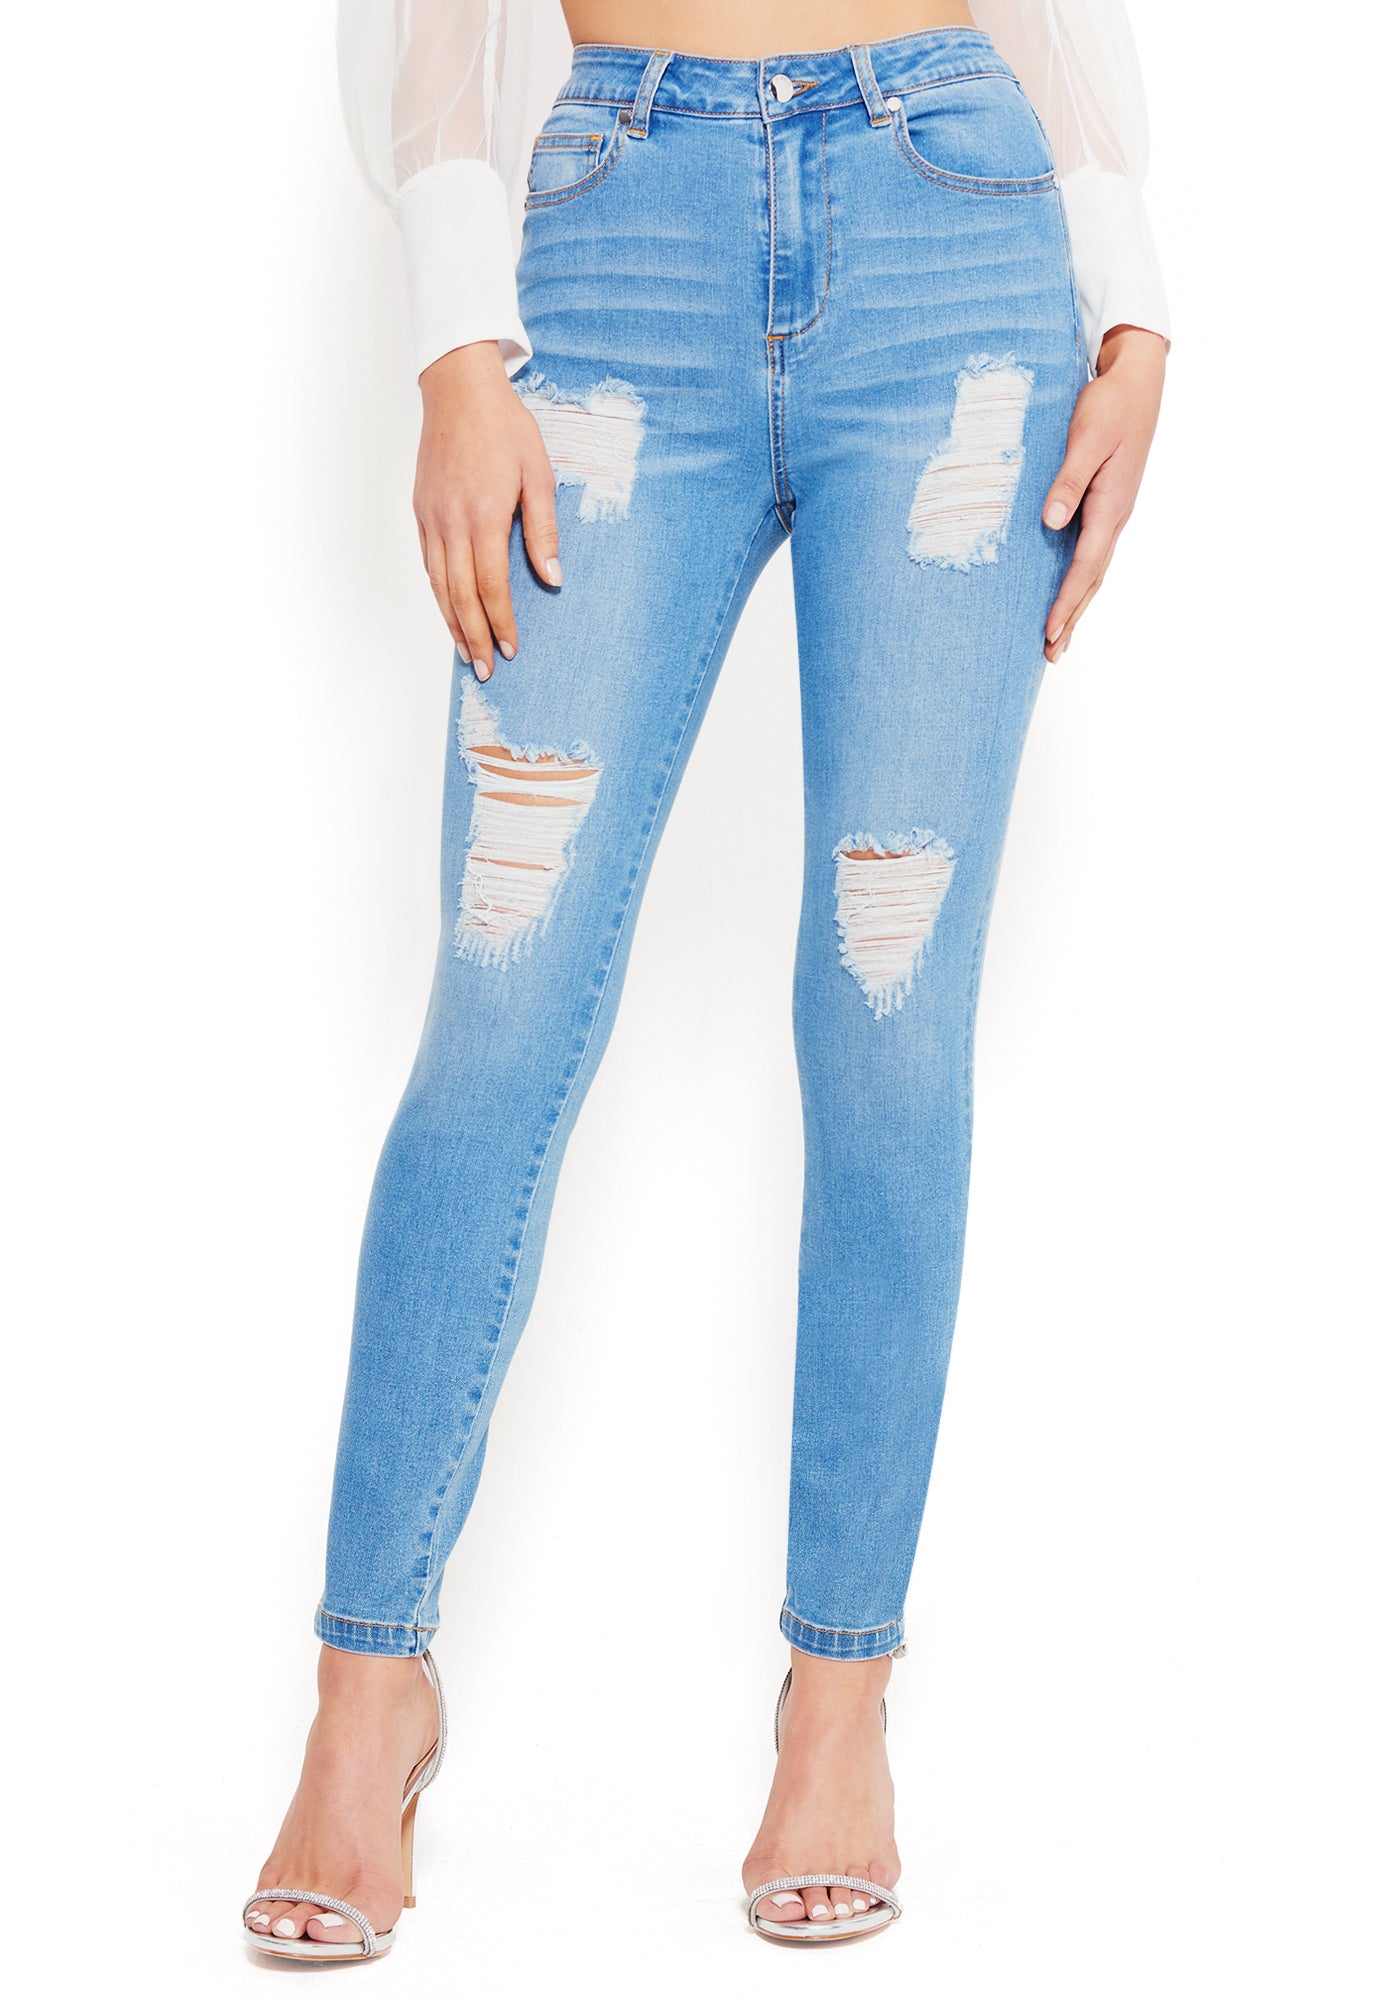 Bebe Women's Destructed Skinny Jeans, Size 25 in Light Blue Wash Cotton/Spandex